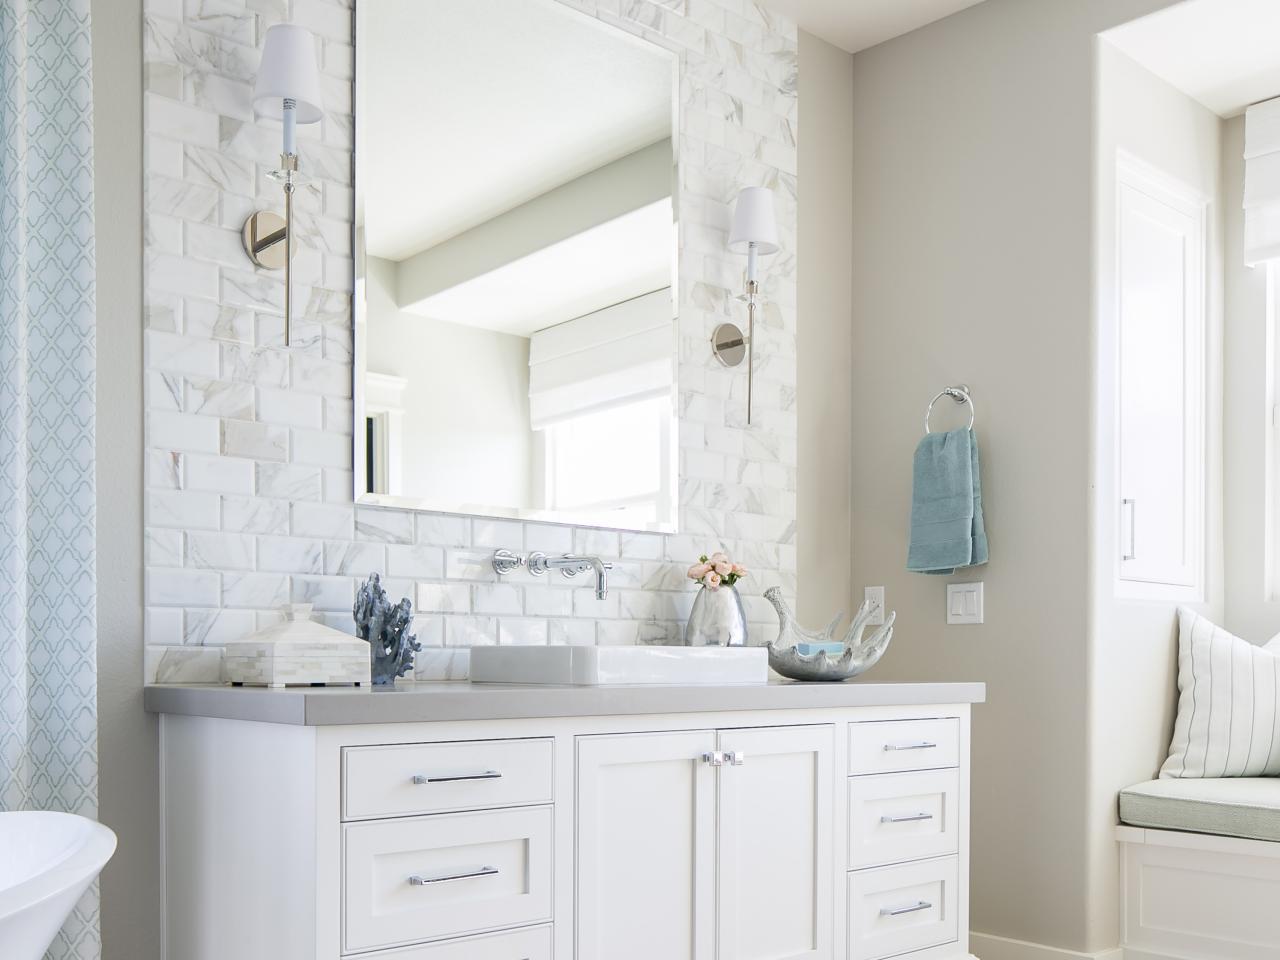 Bathroom Vanity With Gray Countertop